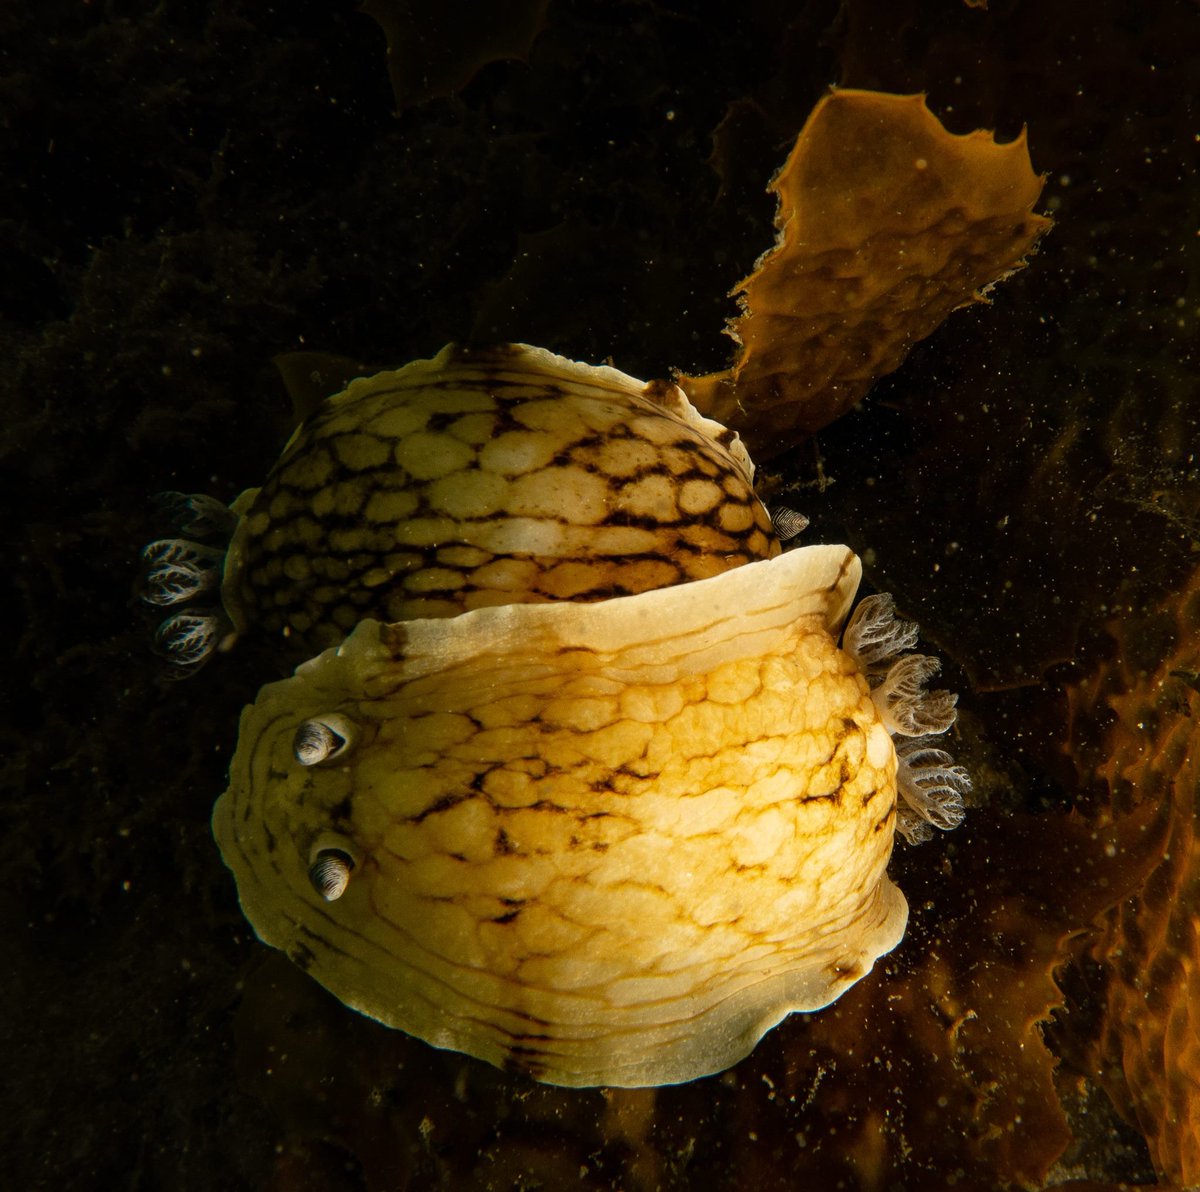 Caught these two getting cosy!

#nudibranch #heterobranchia #mollusc #seaslug #macrophotography #scuba #dive #underwaterphotography #australia #reef #marine #ocean #blue #sea #shoredive #seaweed #algae #canonG15 #seaandsea #marinescience #mating #couple